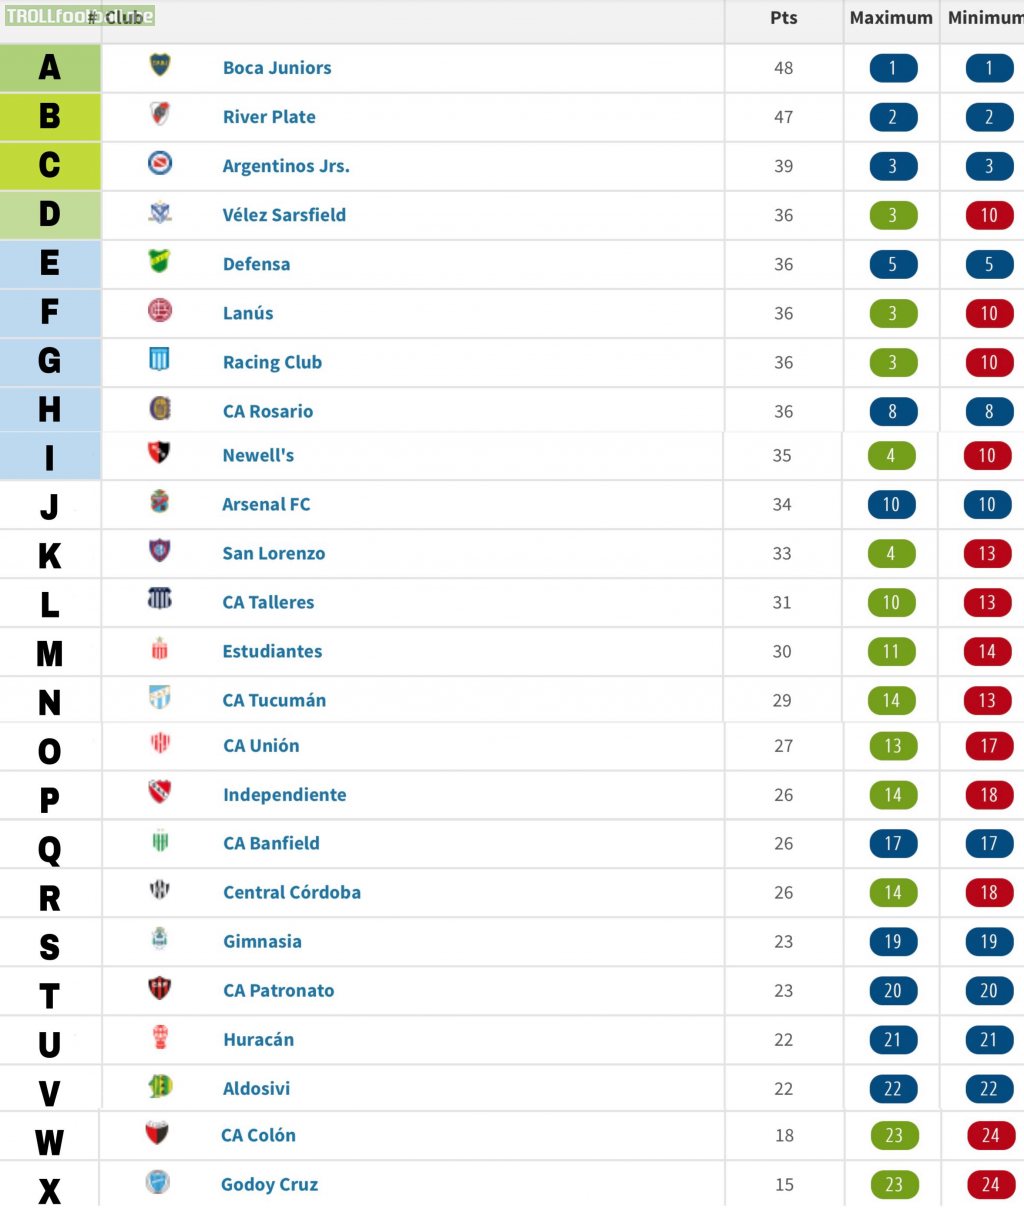 Argentine Superliga’s final league table